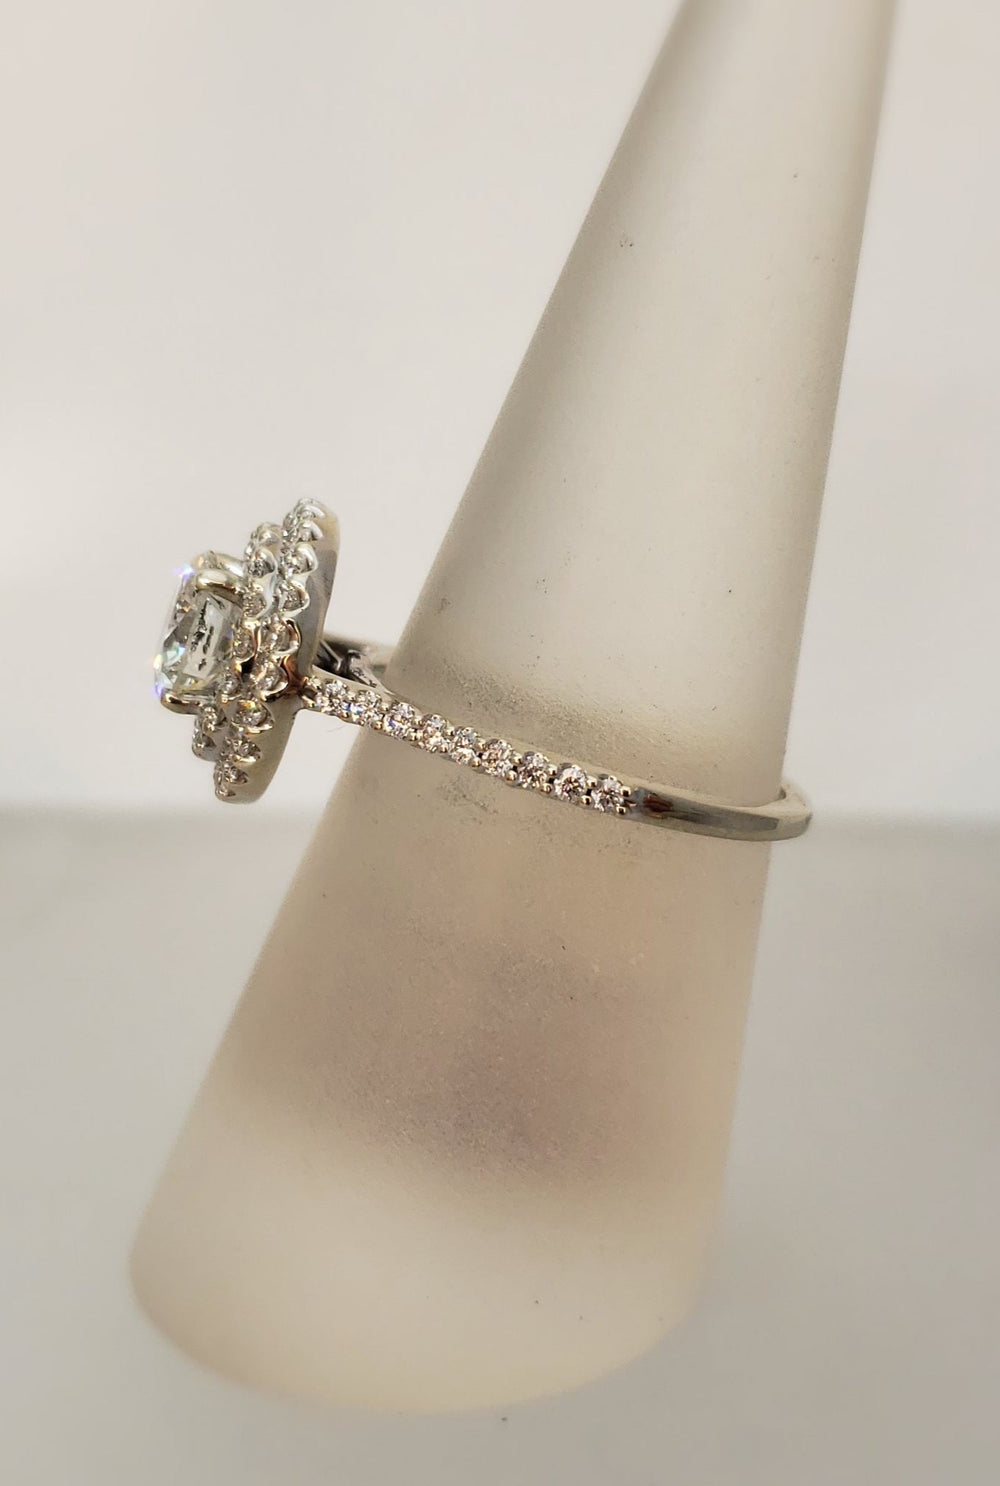 Double halo round brilliant diamond engagement ring